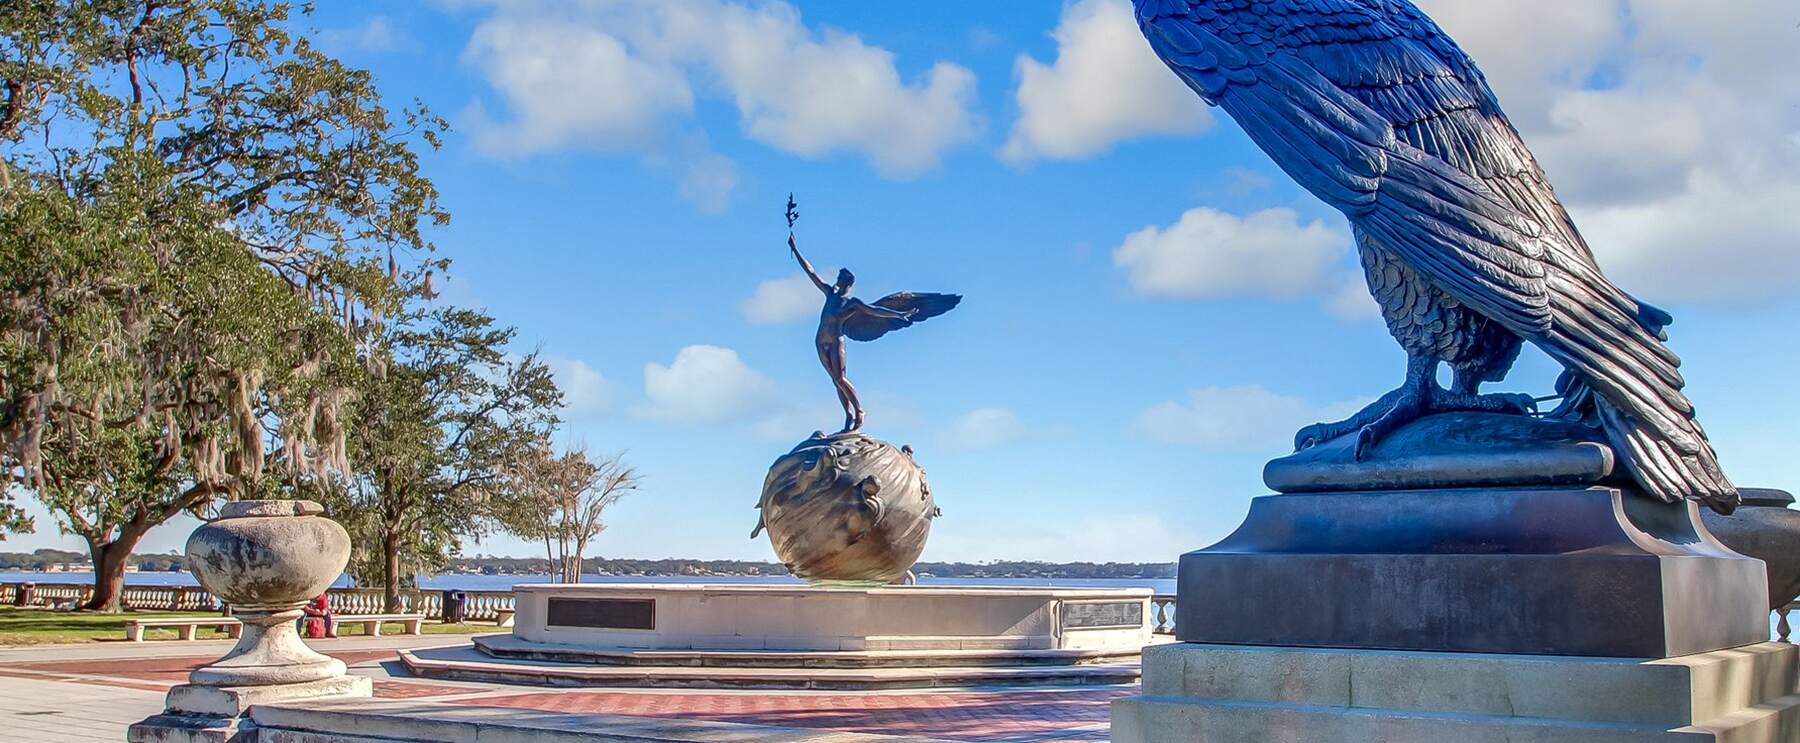 Life Statue In Riverside Neighborhood of Jacksonville